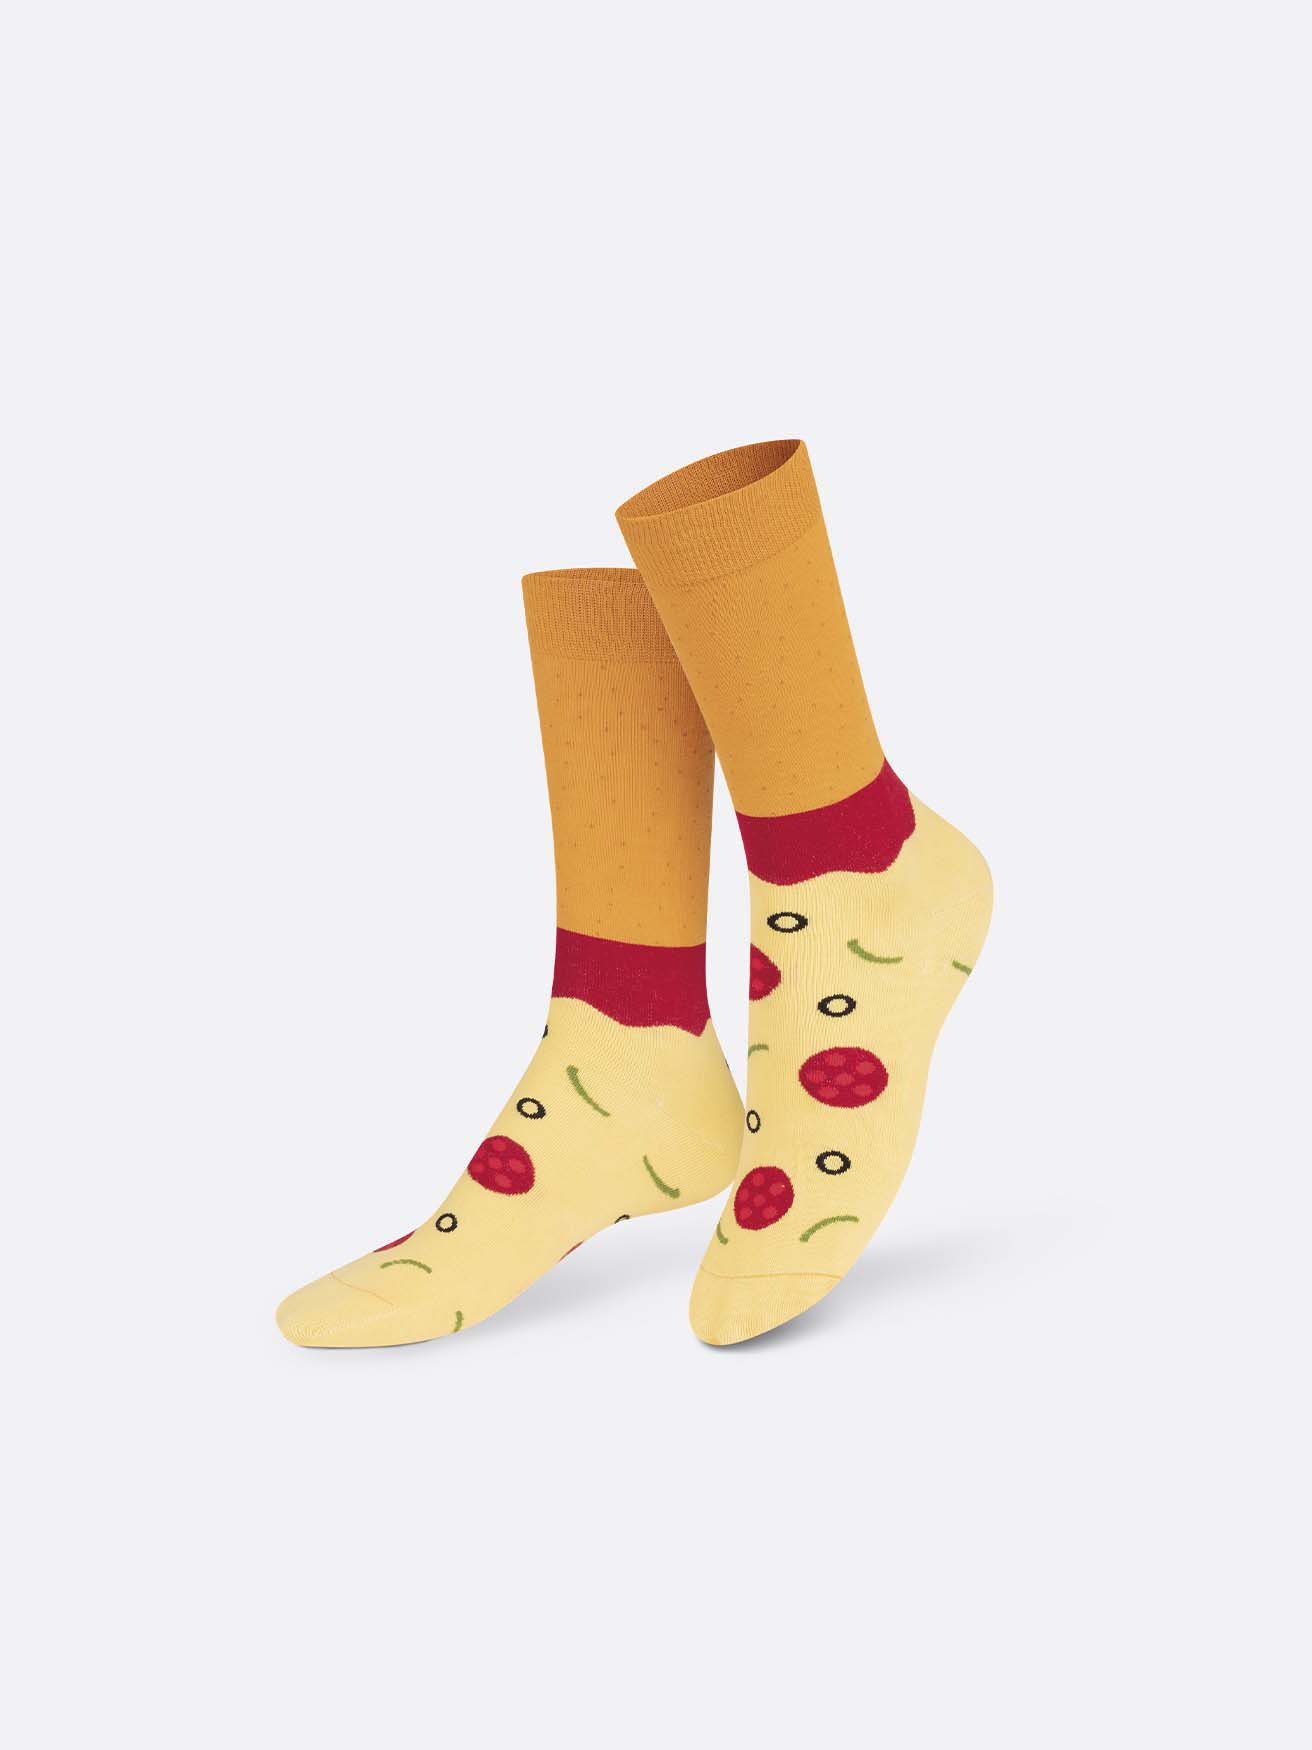 Eat My Socks- Napoli Pizza